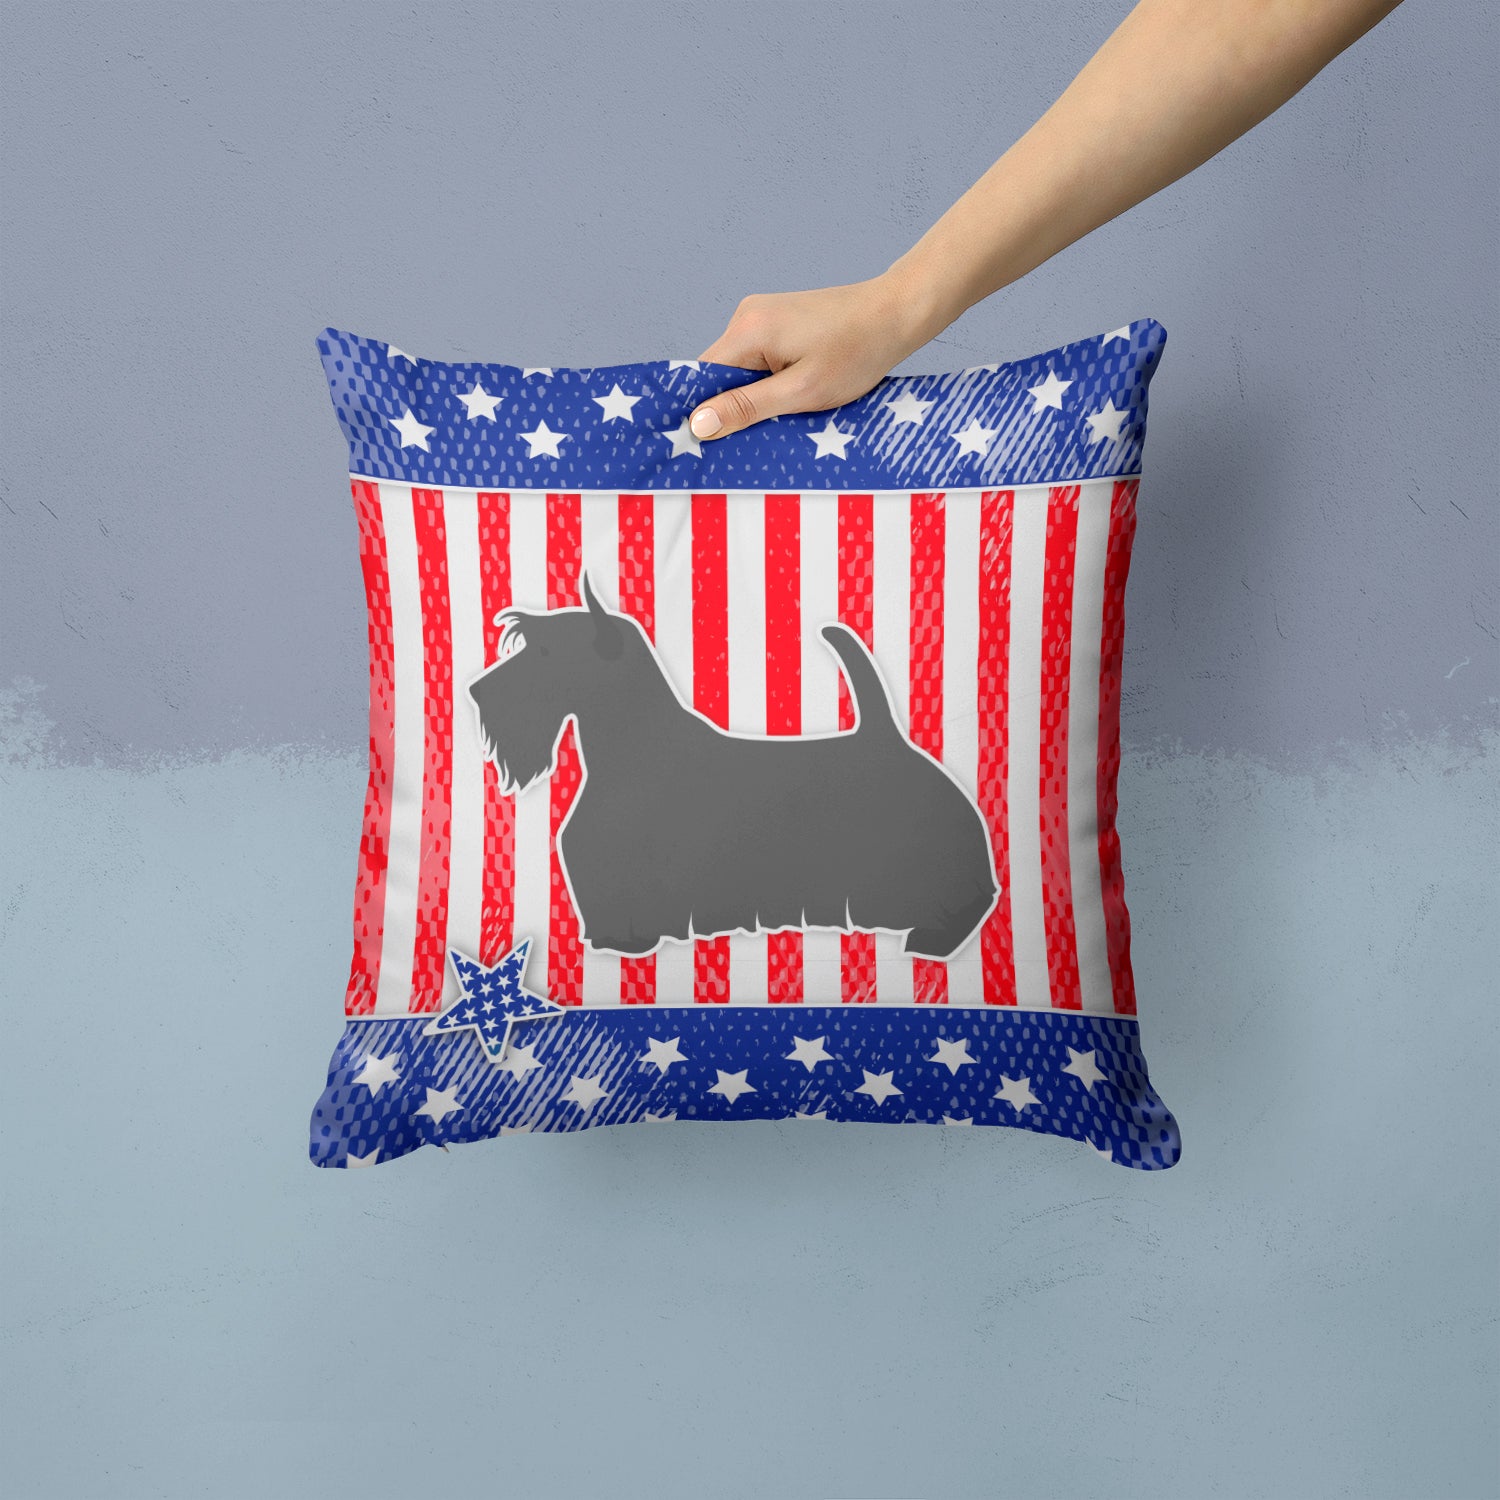 USA Patriotic Scottish Terrier Fabric Decorative Pillow BB3369PW1414 - the-store.com